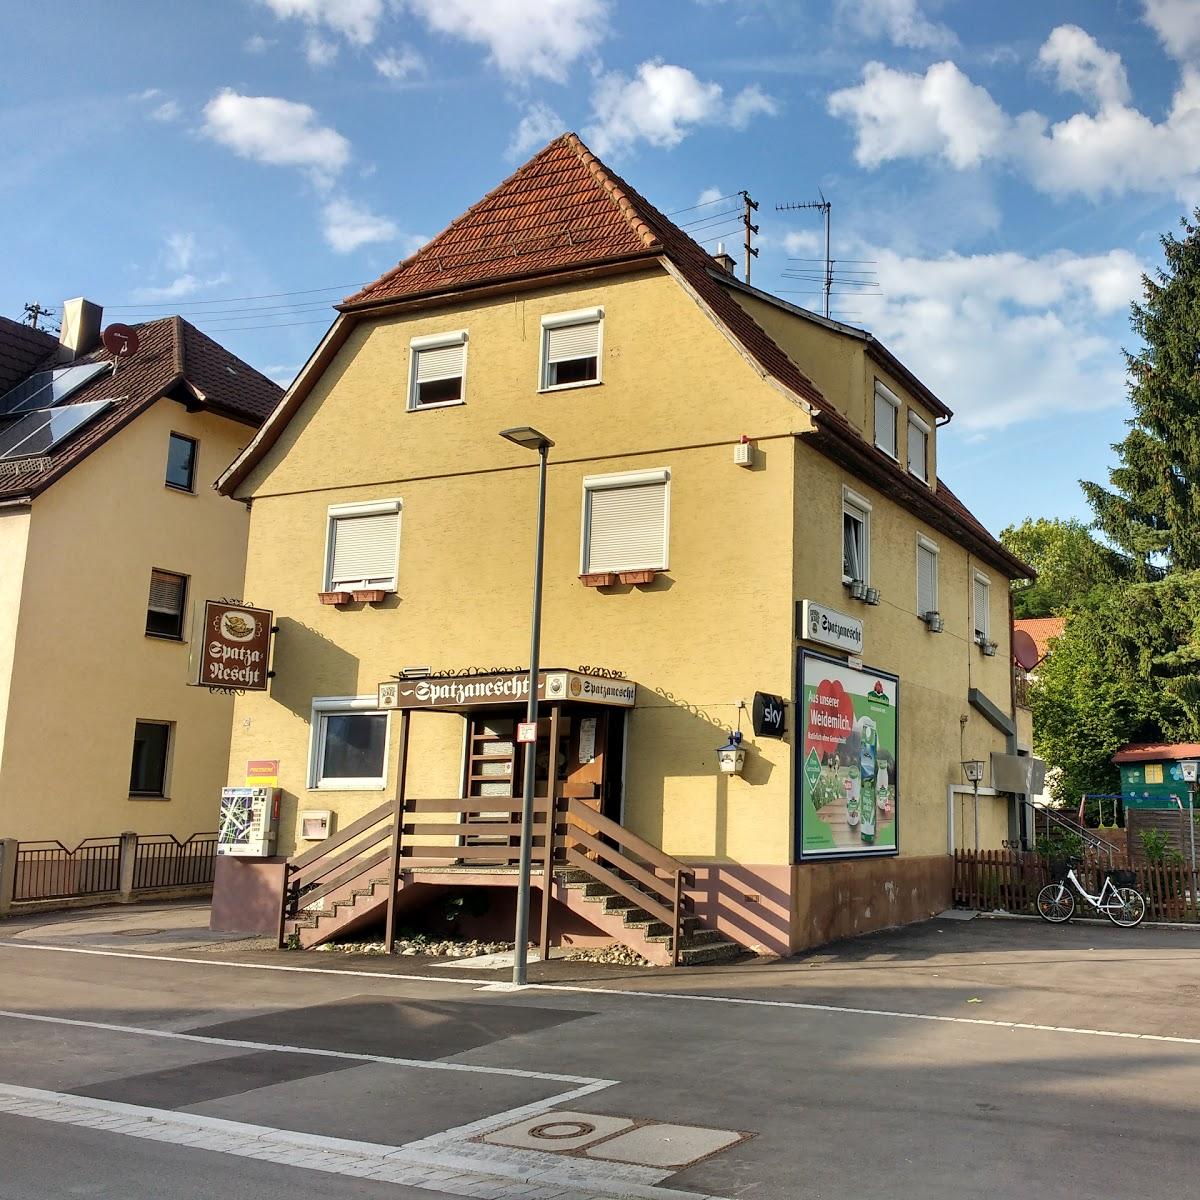 Restaurant "Spatzanescht" in Plüderhausen